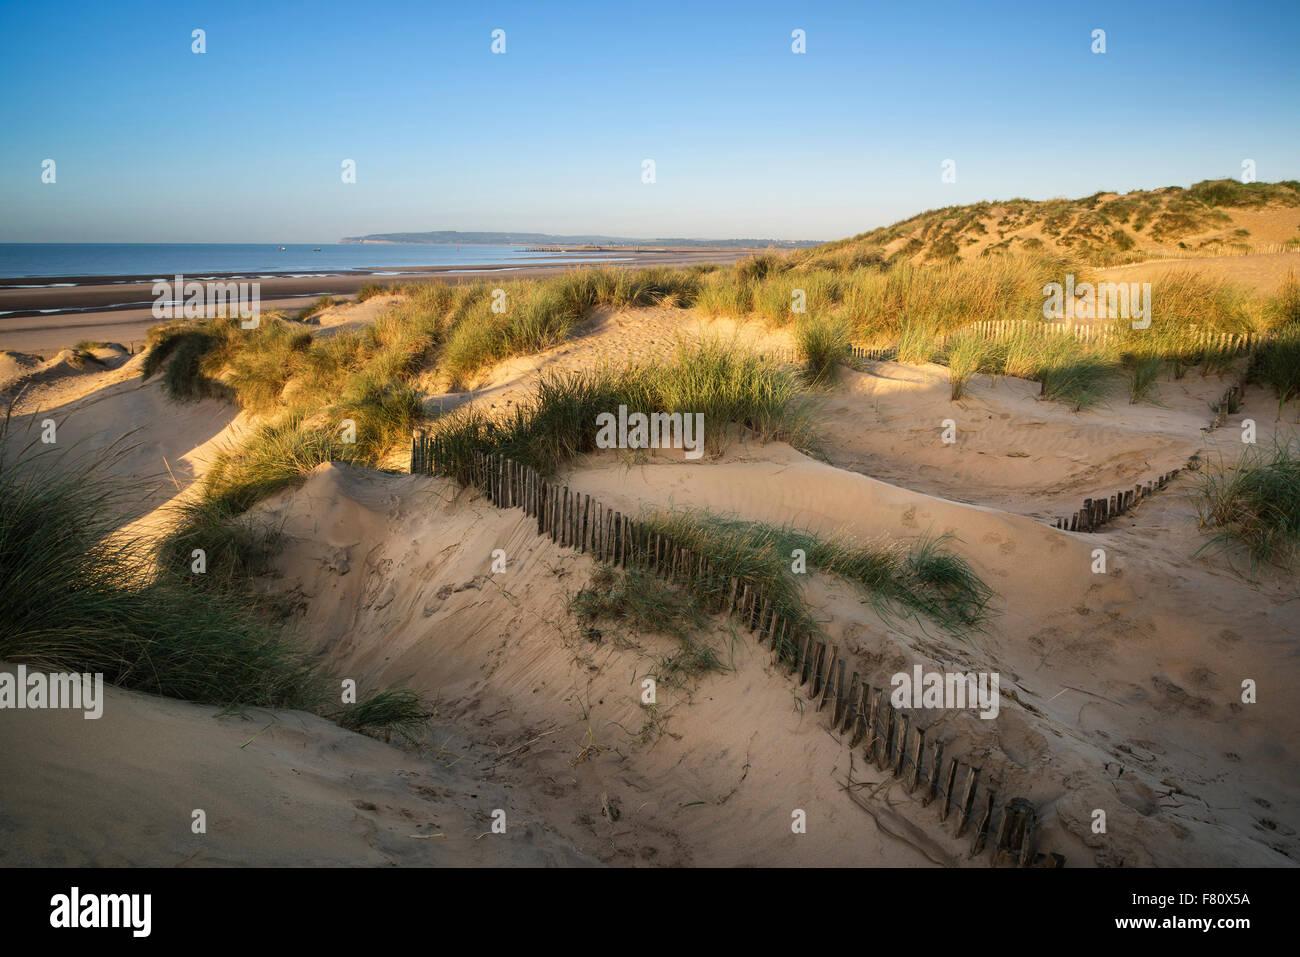 Stunning sunrise over sand dunes system on yellow sand golden beach Stock Photo